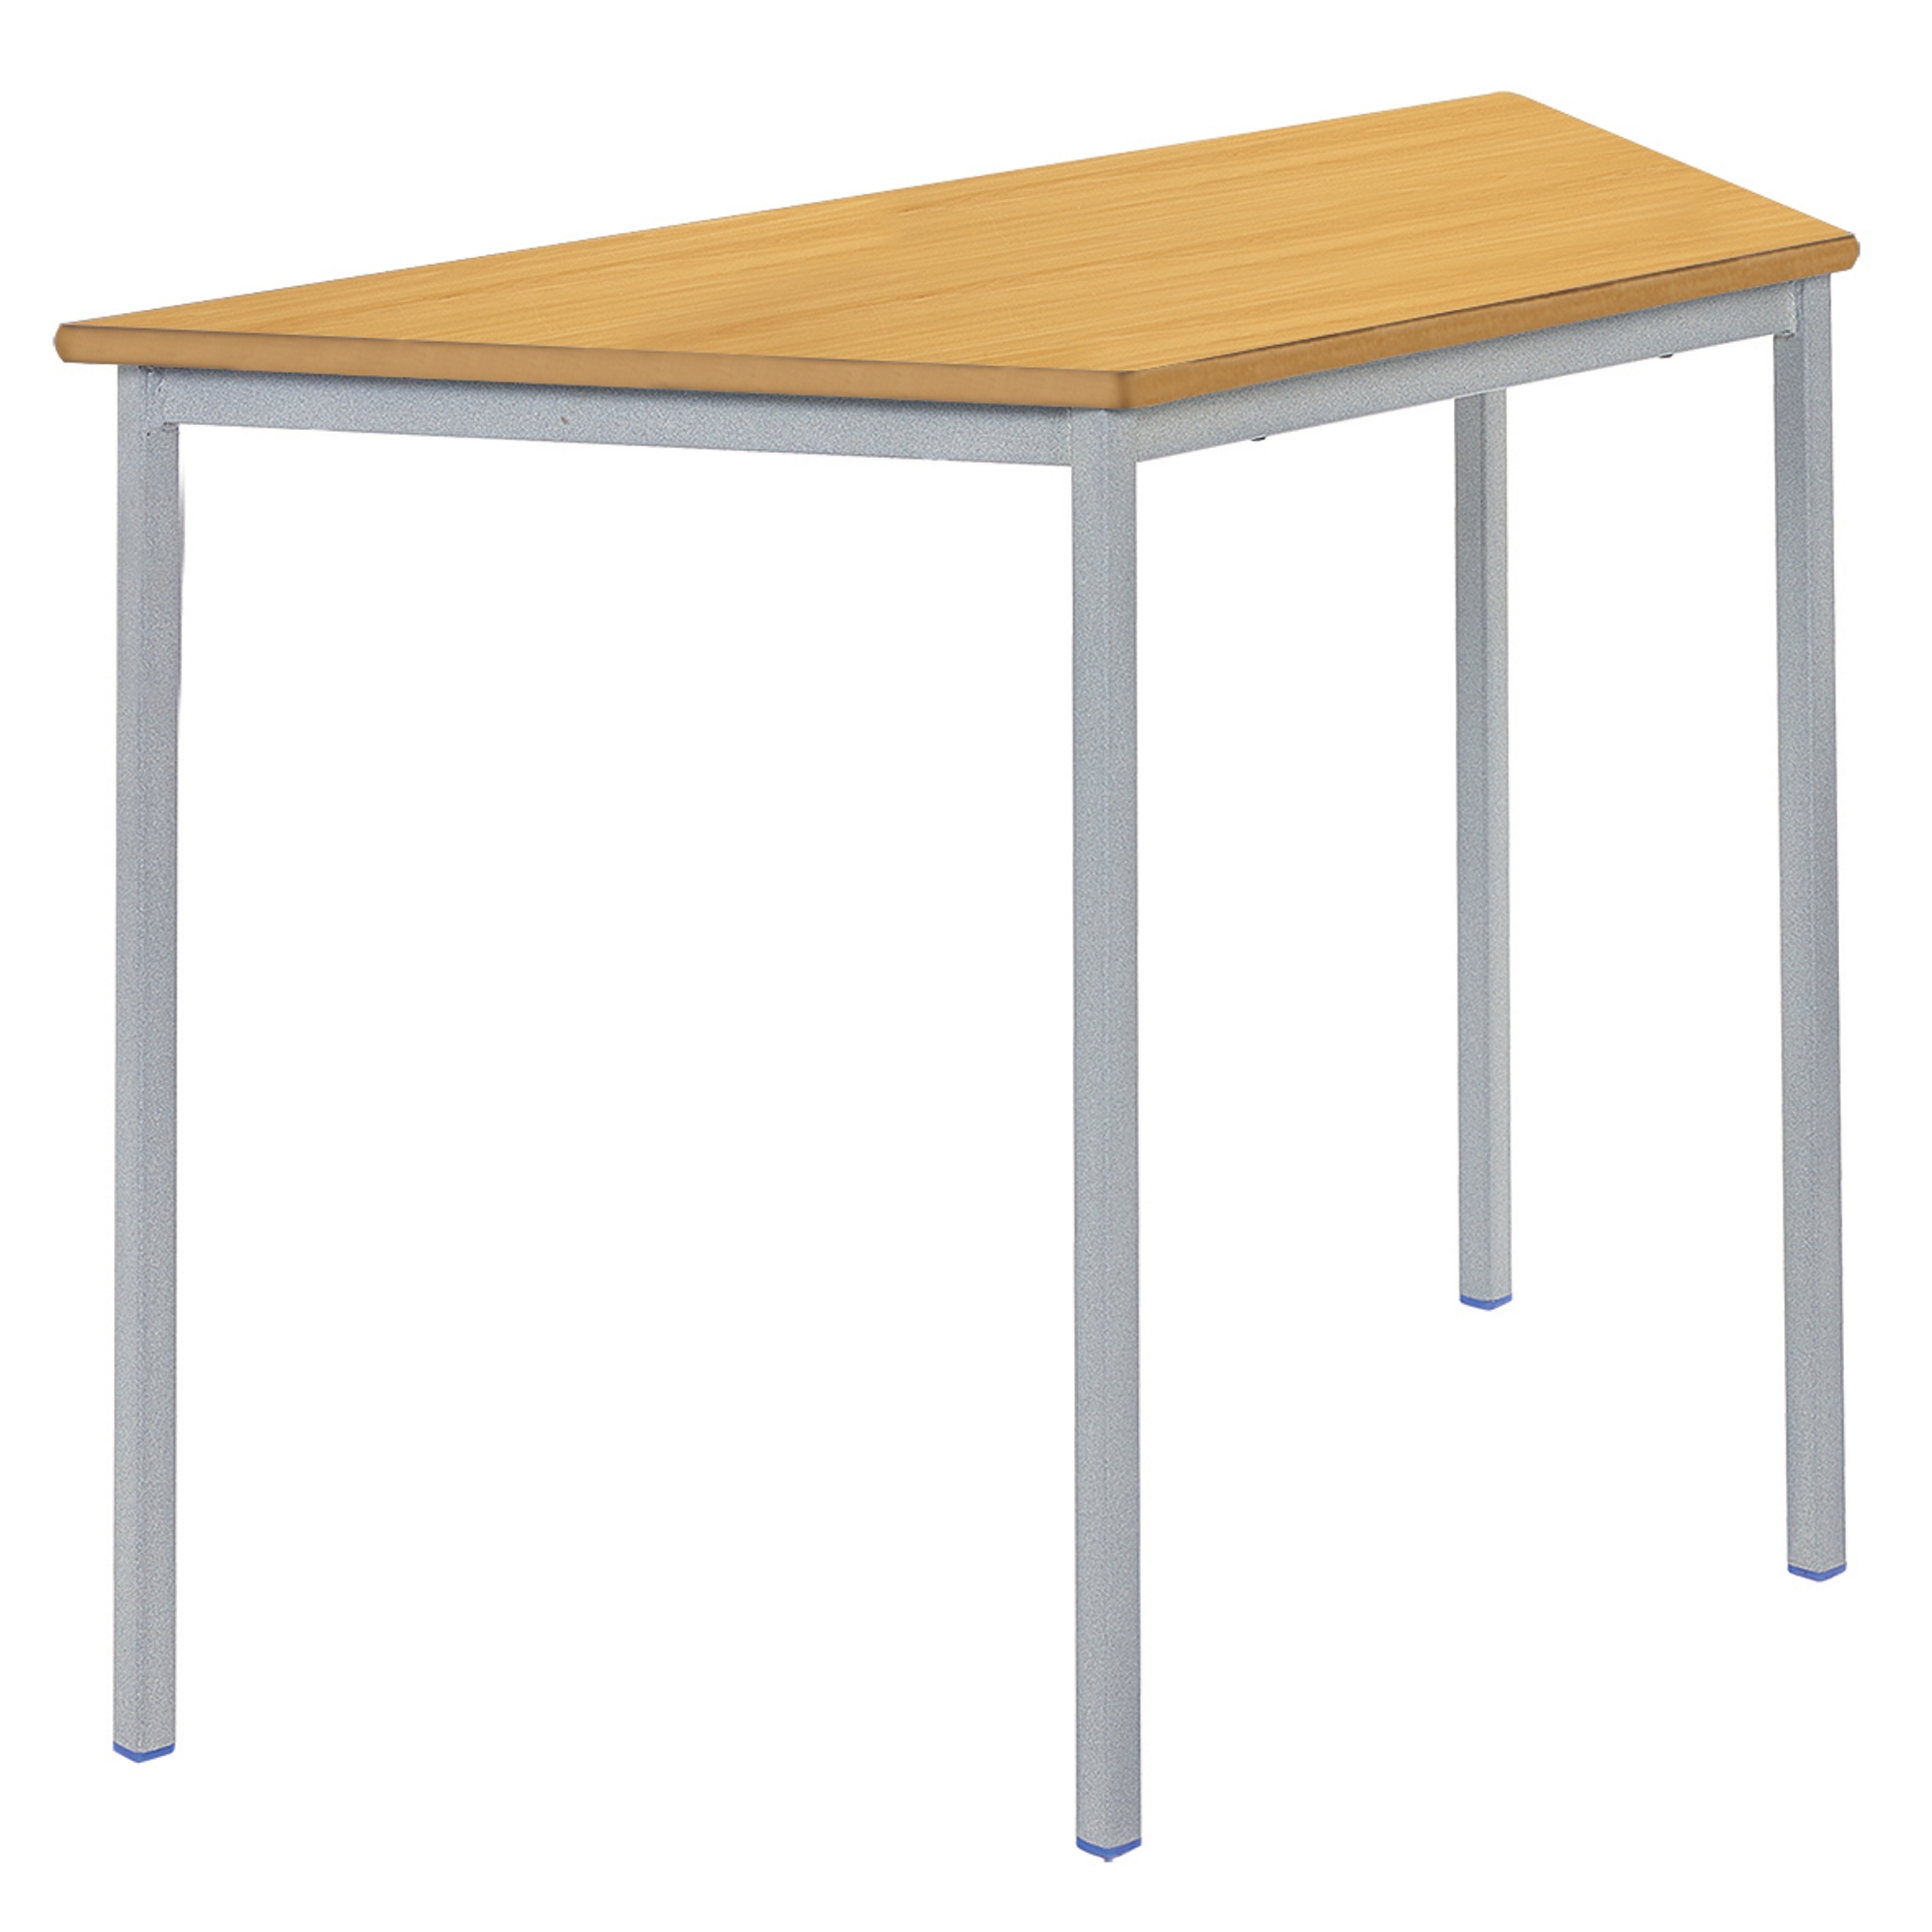 Classmates Trapezoidal Fully Welded Classroom Table - 1100 x 550 x 460mm - Beech